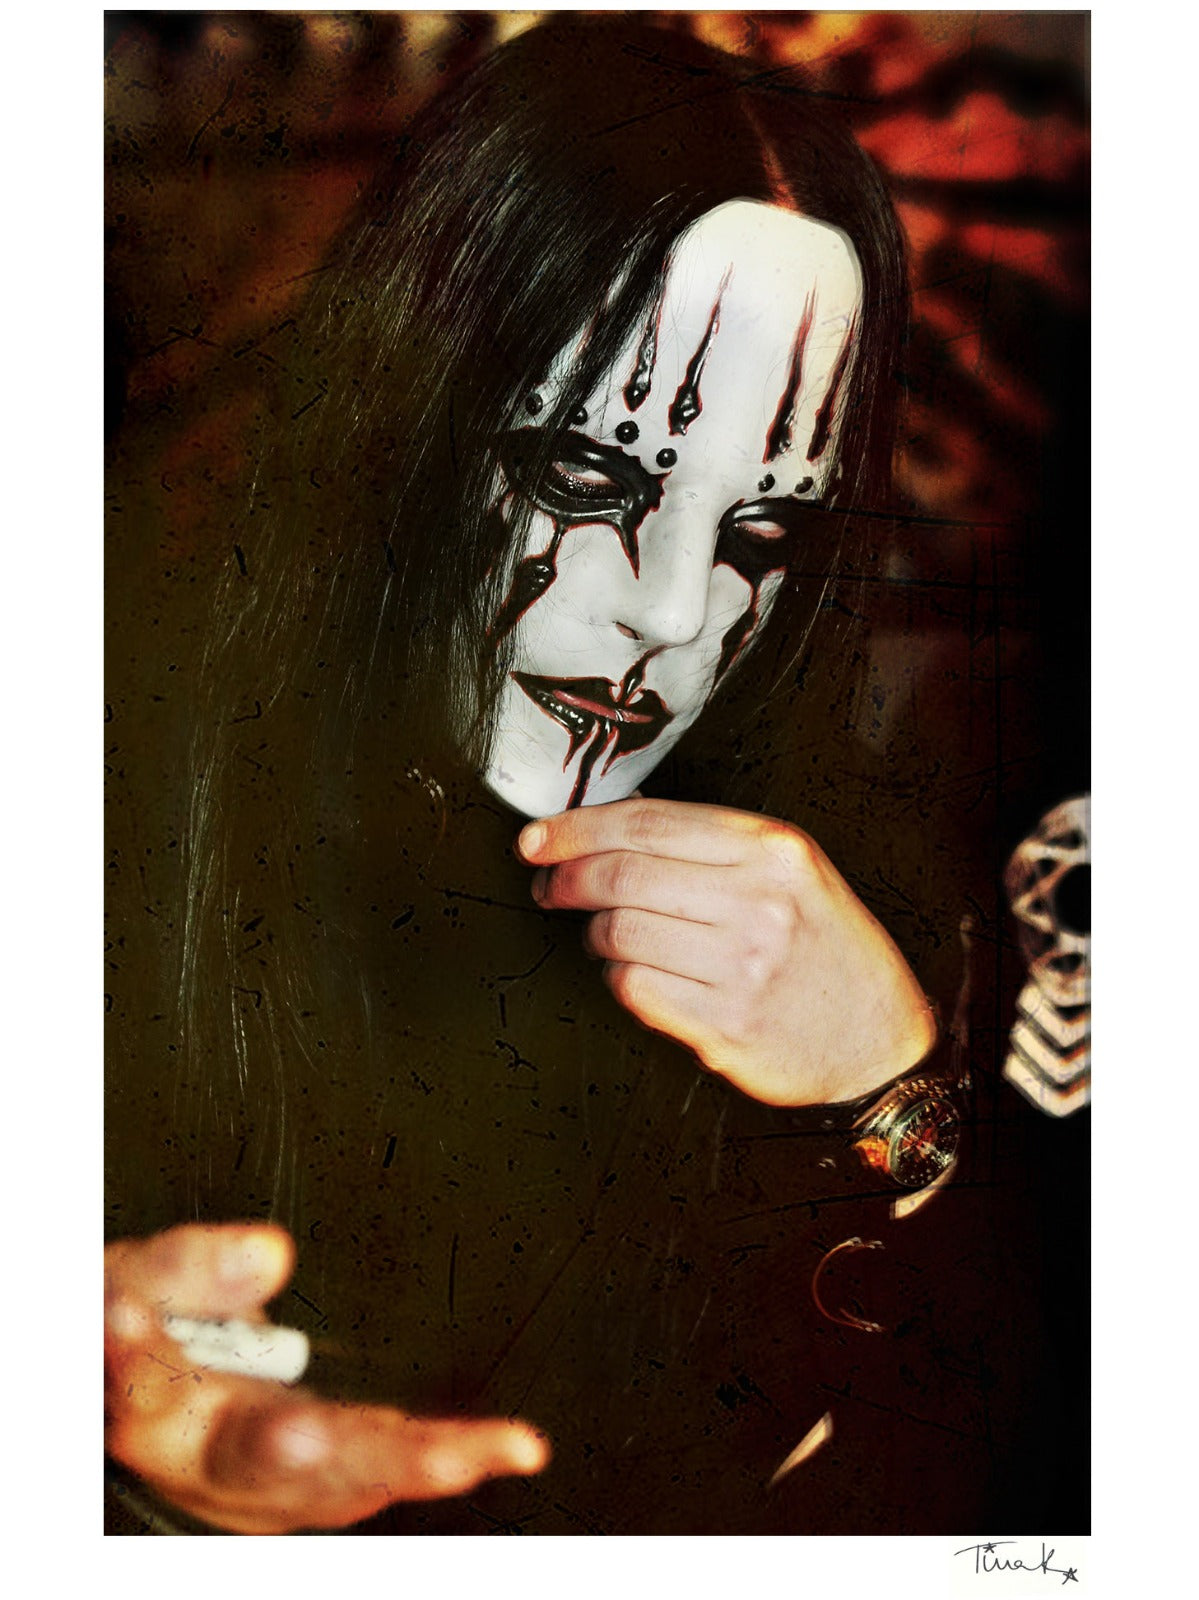 Joey Jordison (Murderdolls, Slipknot) closeup at Virgin Megastore signing with Slipknot 2004. Print signed by Tina K Photography